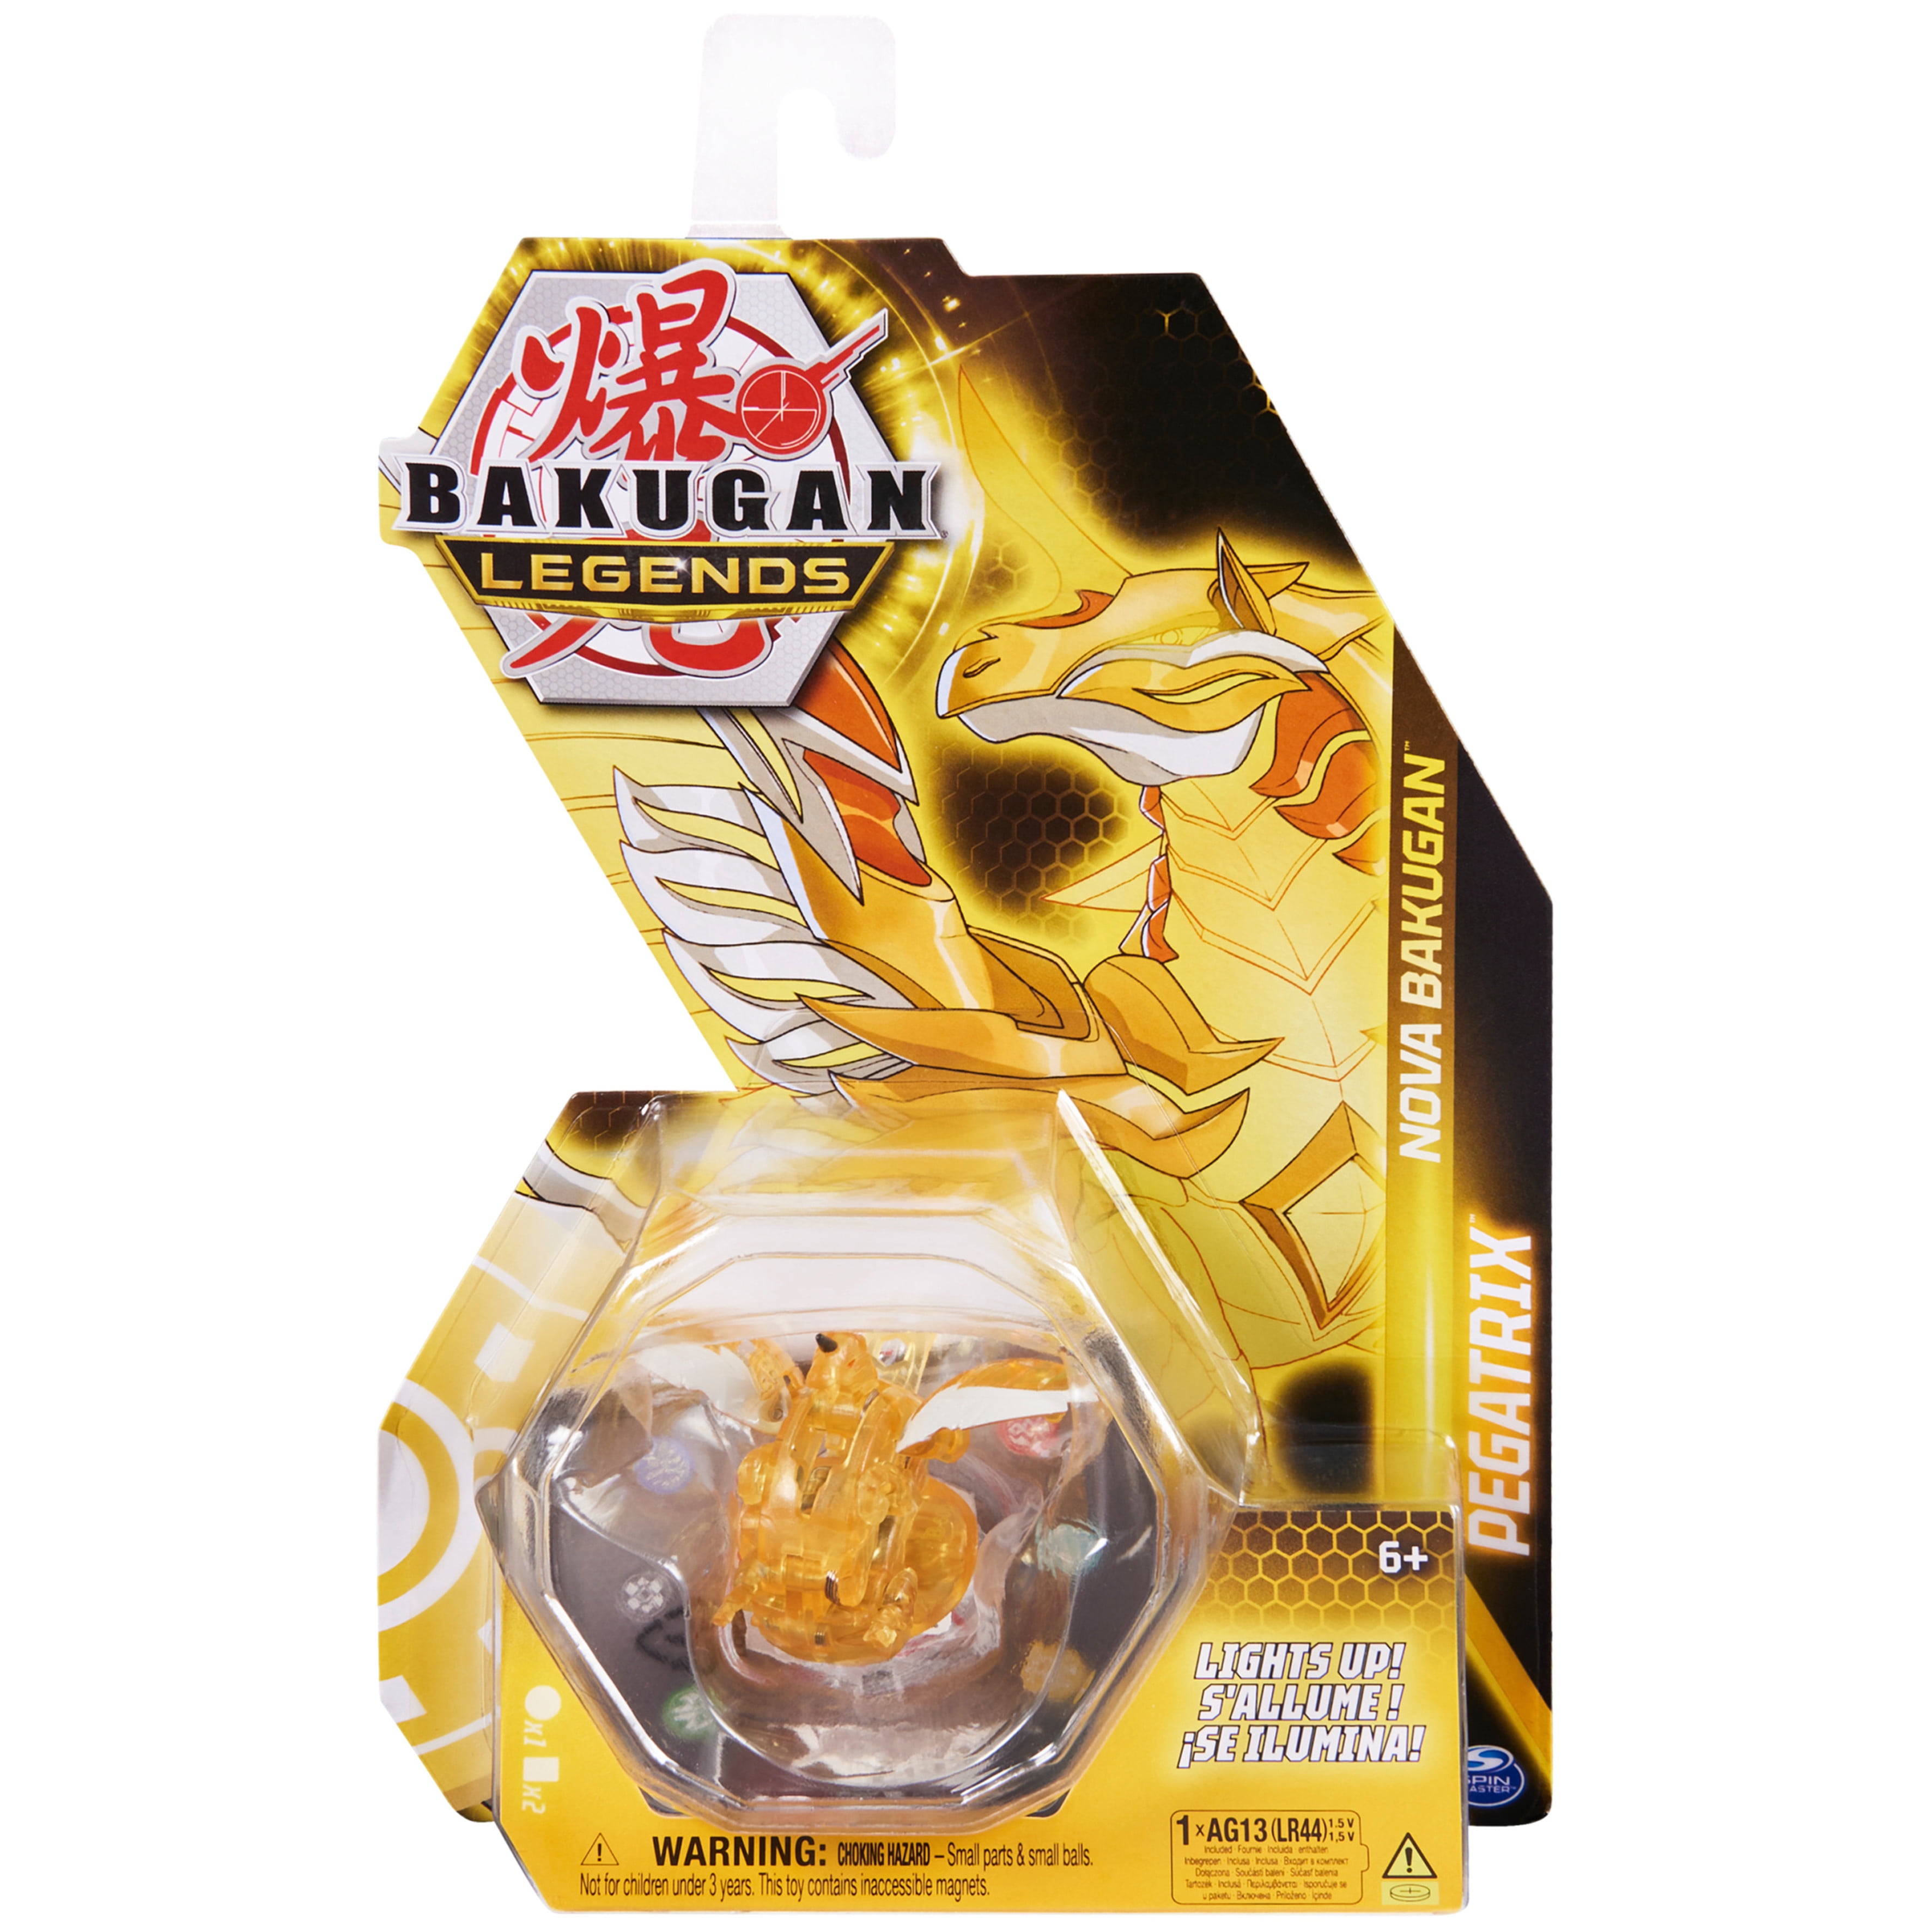 Bakugan Legends, Nova Pegatrix (Gold), Light Up Bakugan Action Figures with  Trading Card